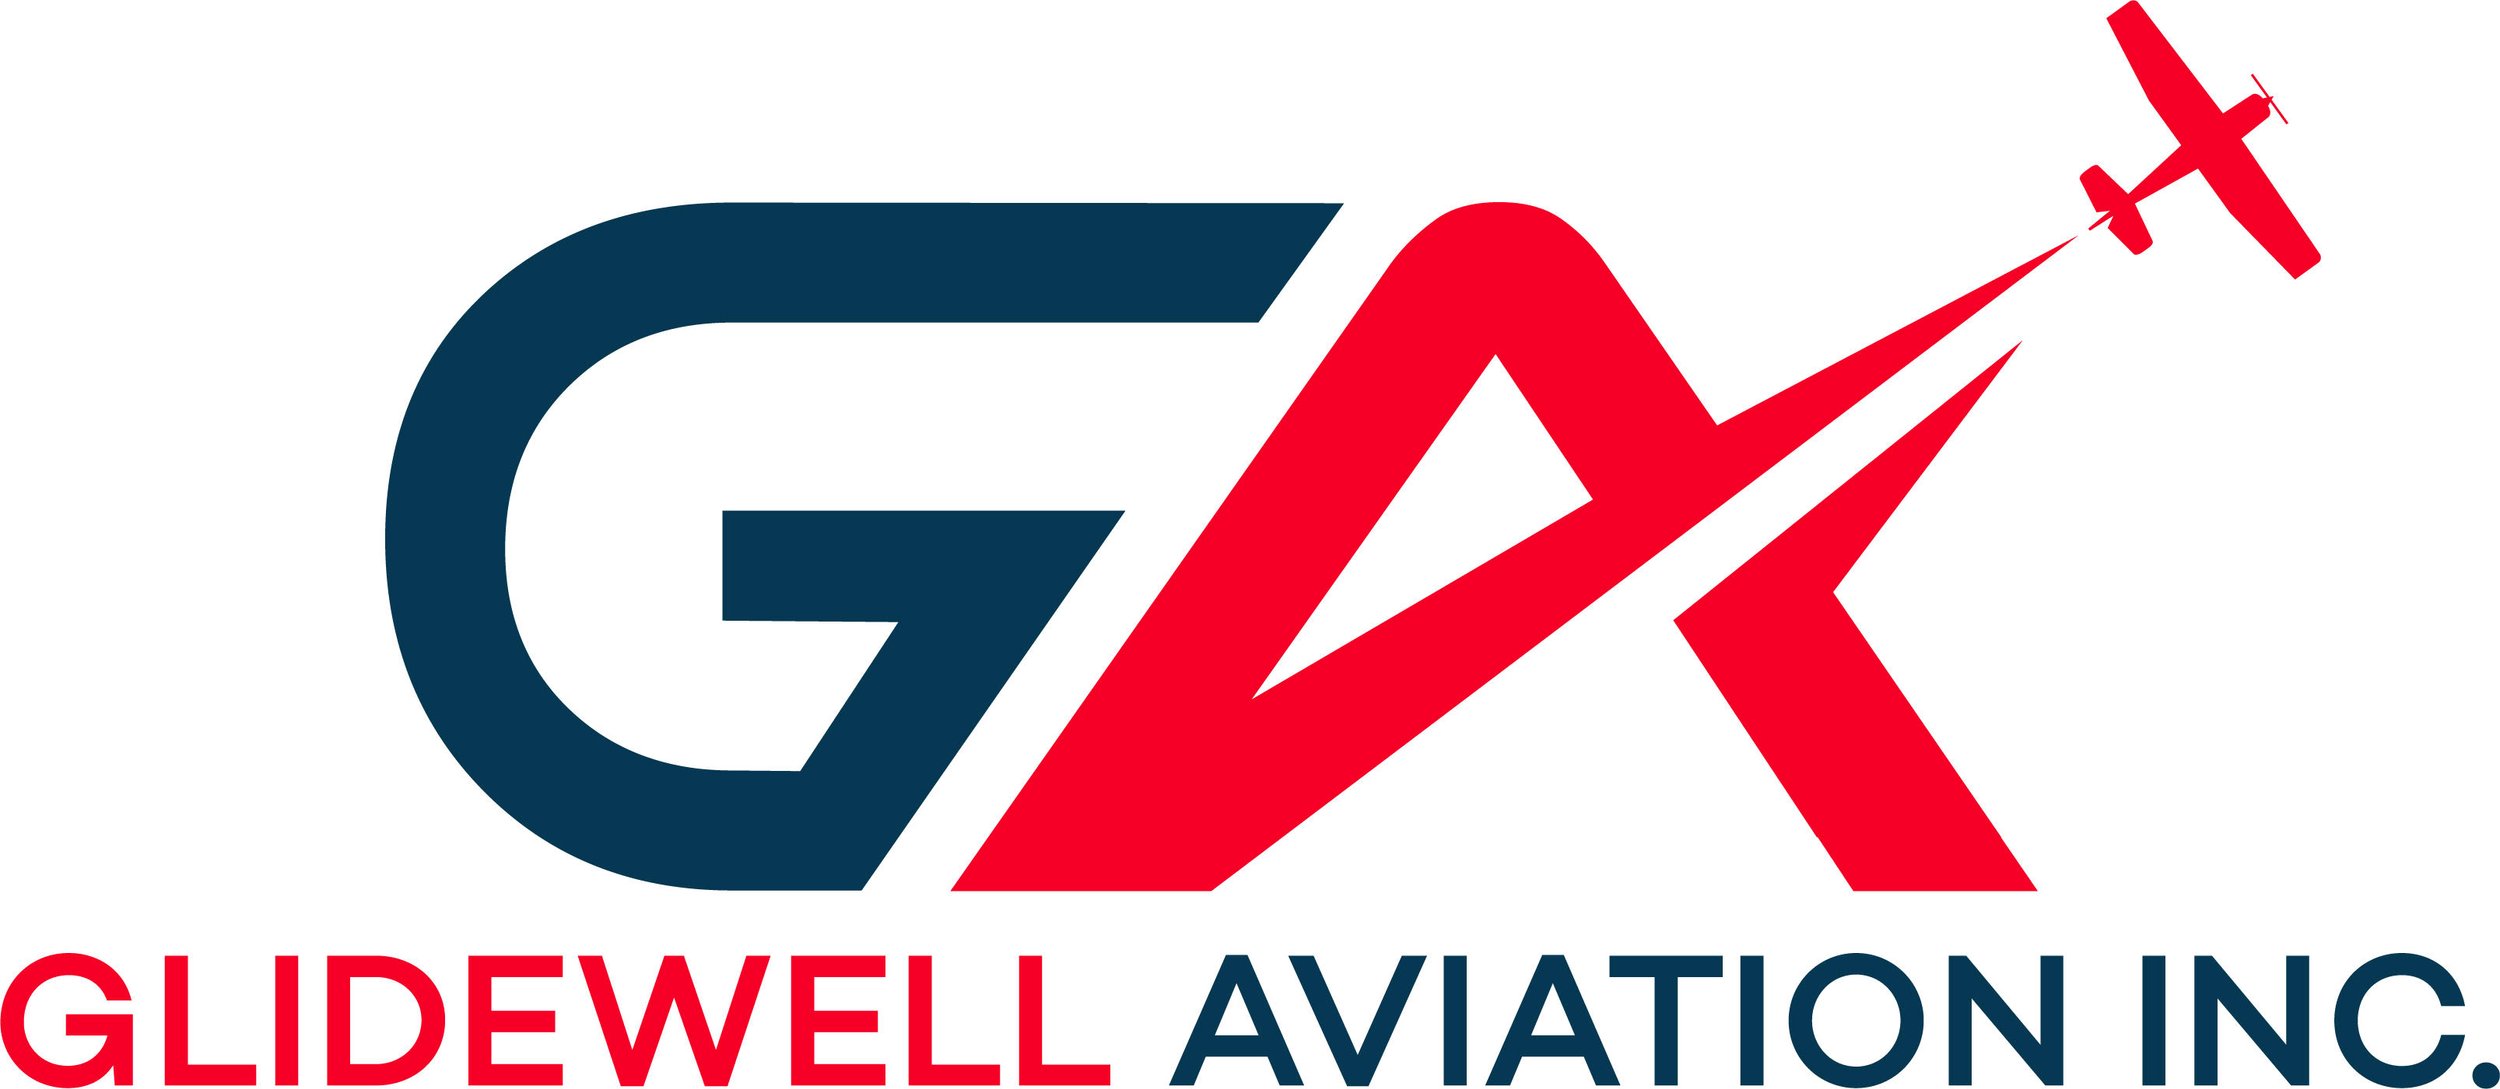 Copy of Glidewell Aviation.jpeg